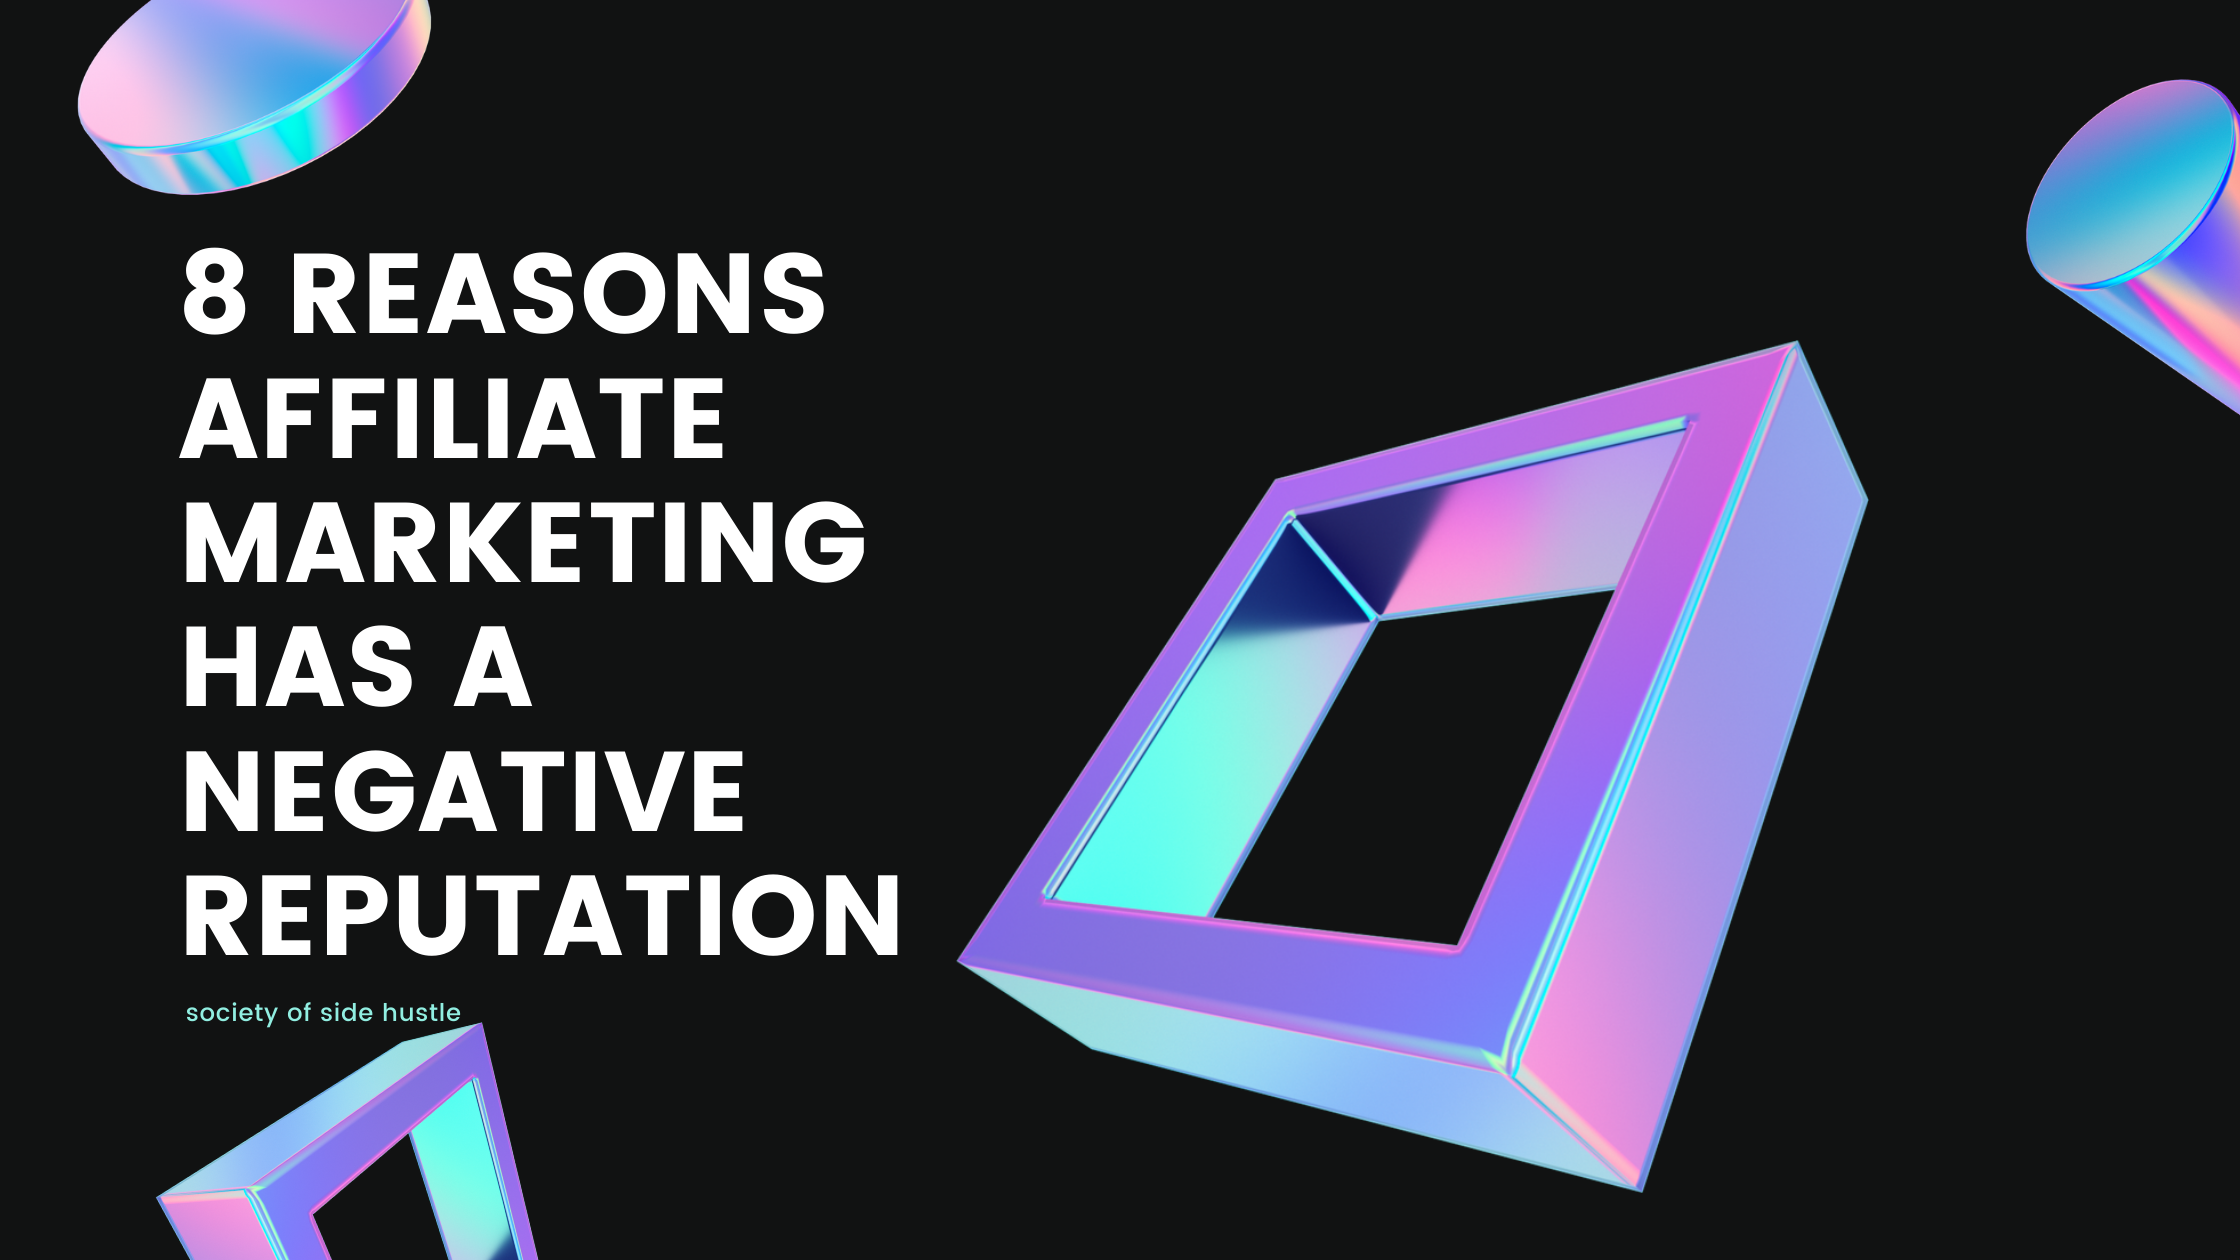 8 Reasons Affiliate Marketing Has a Negative Reputation